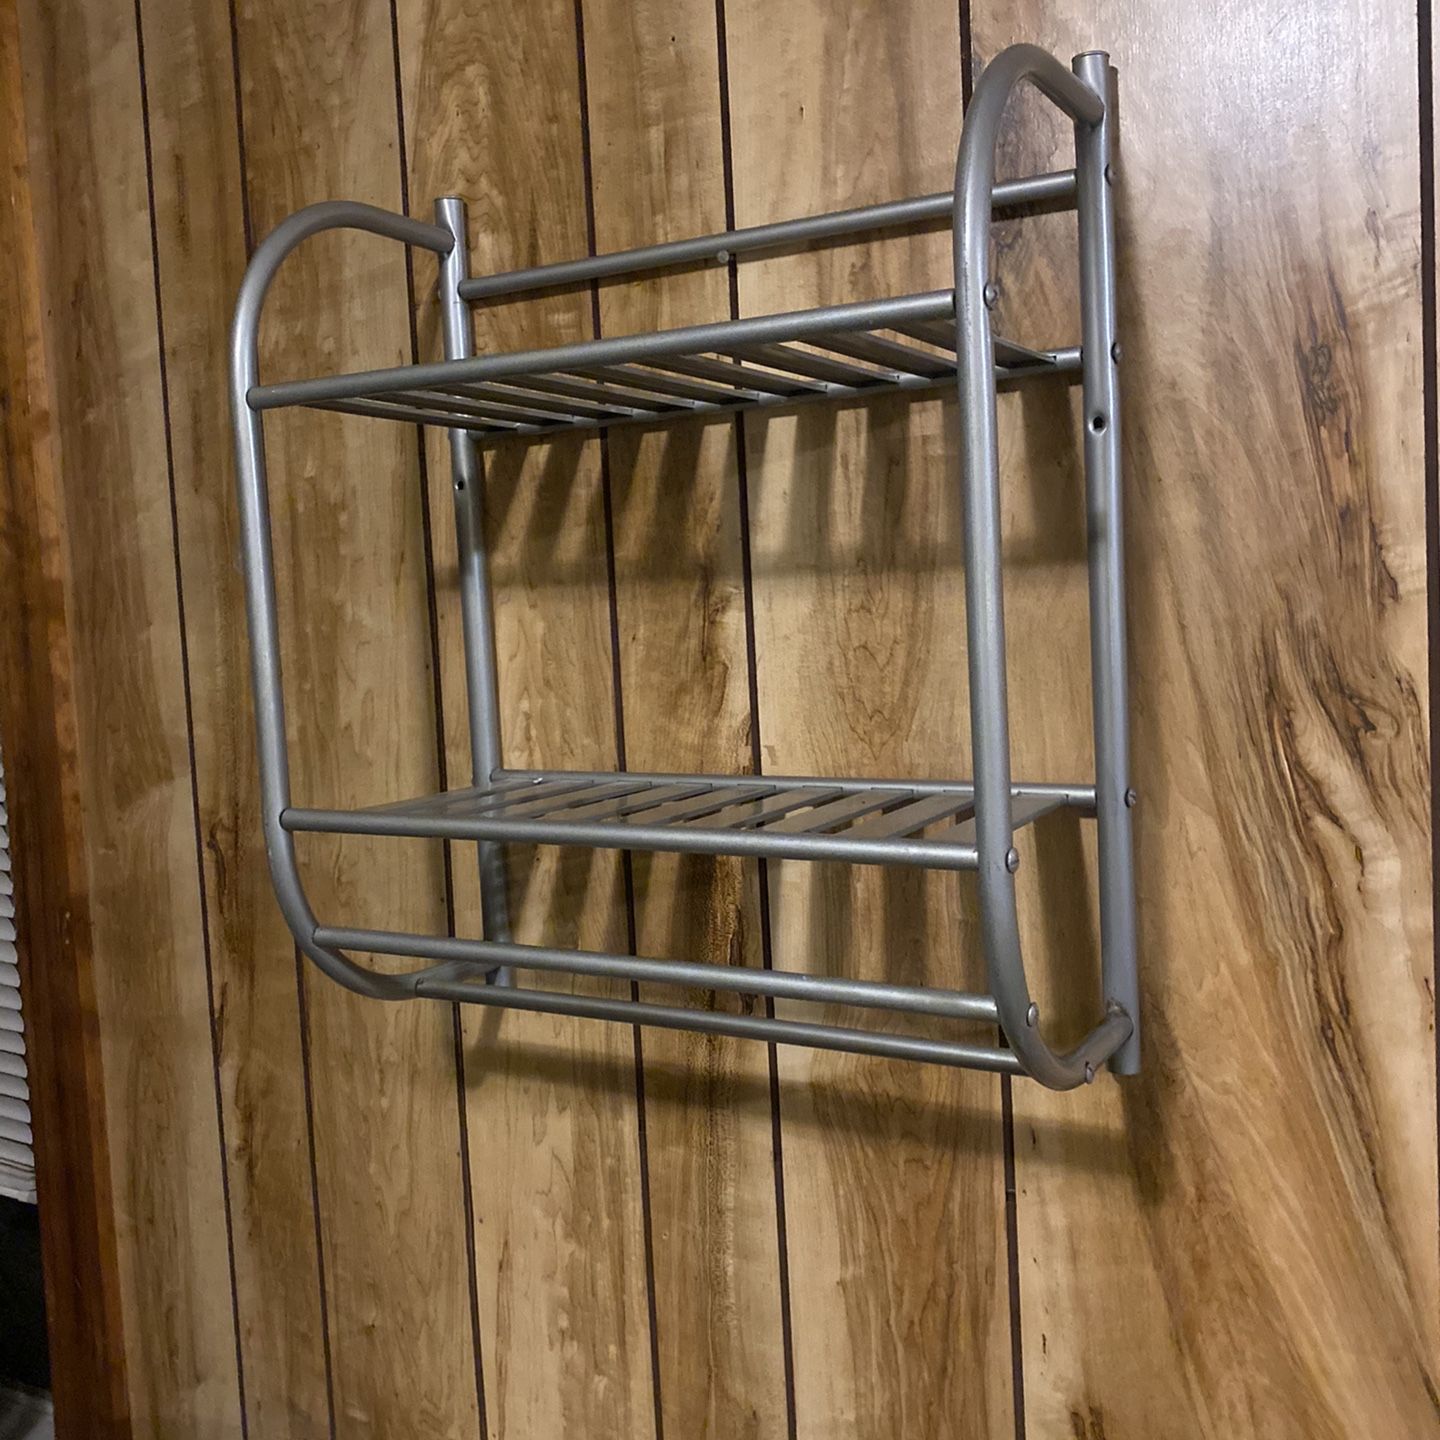 Shelf for Kitchen Or Bathroom